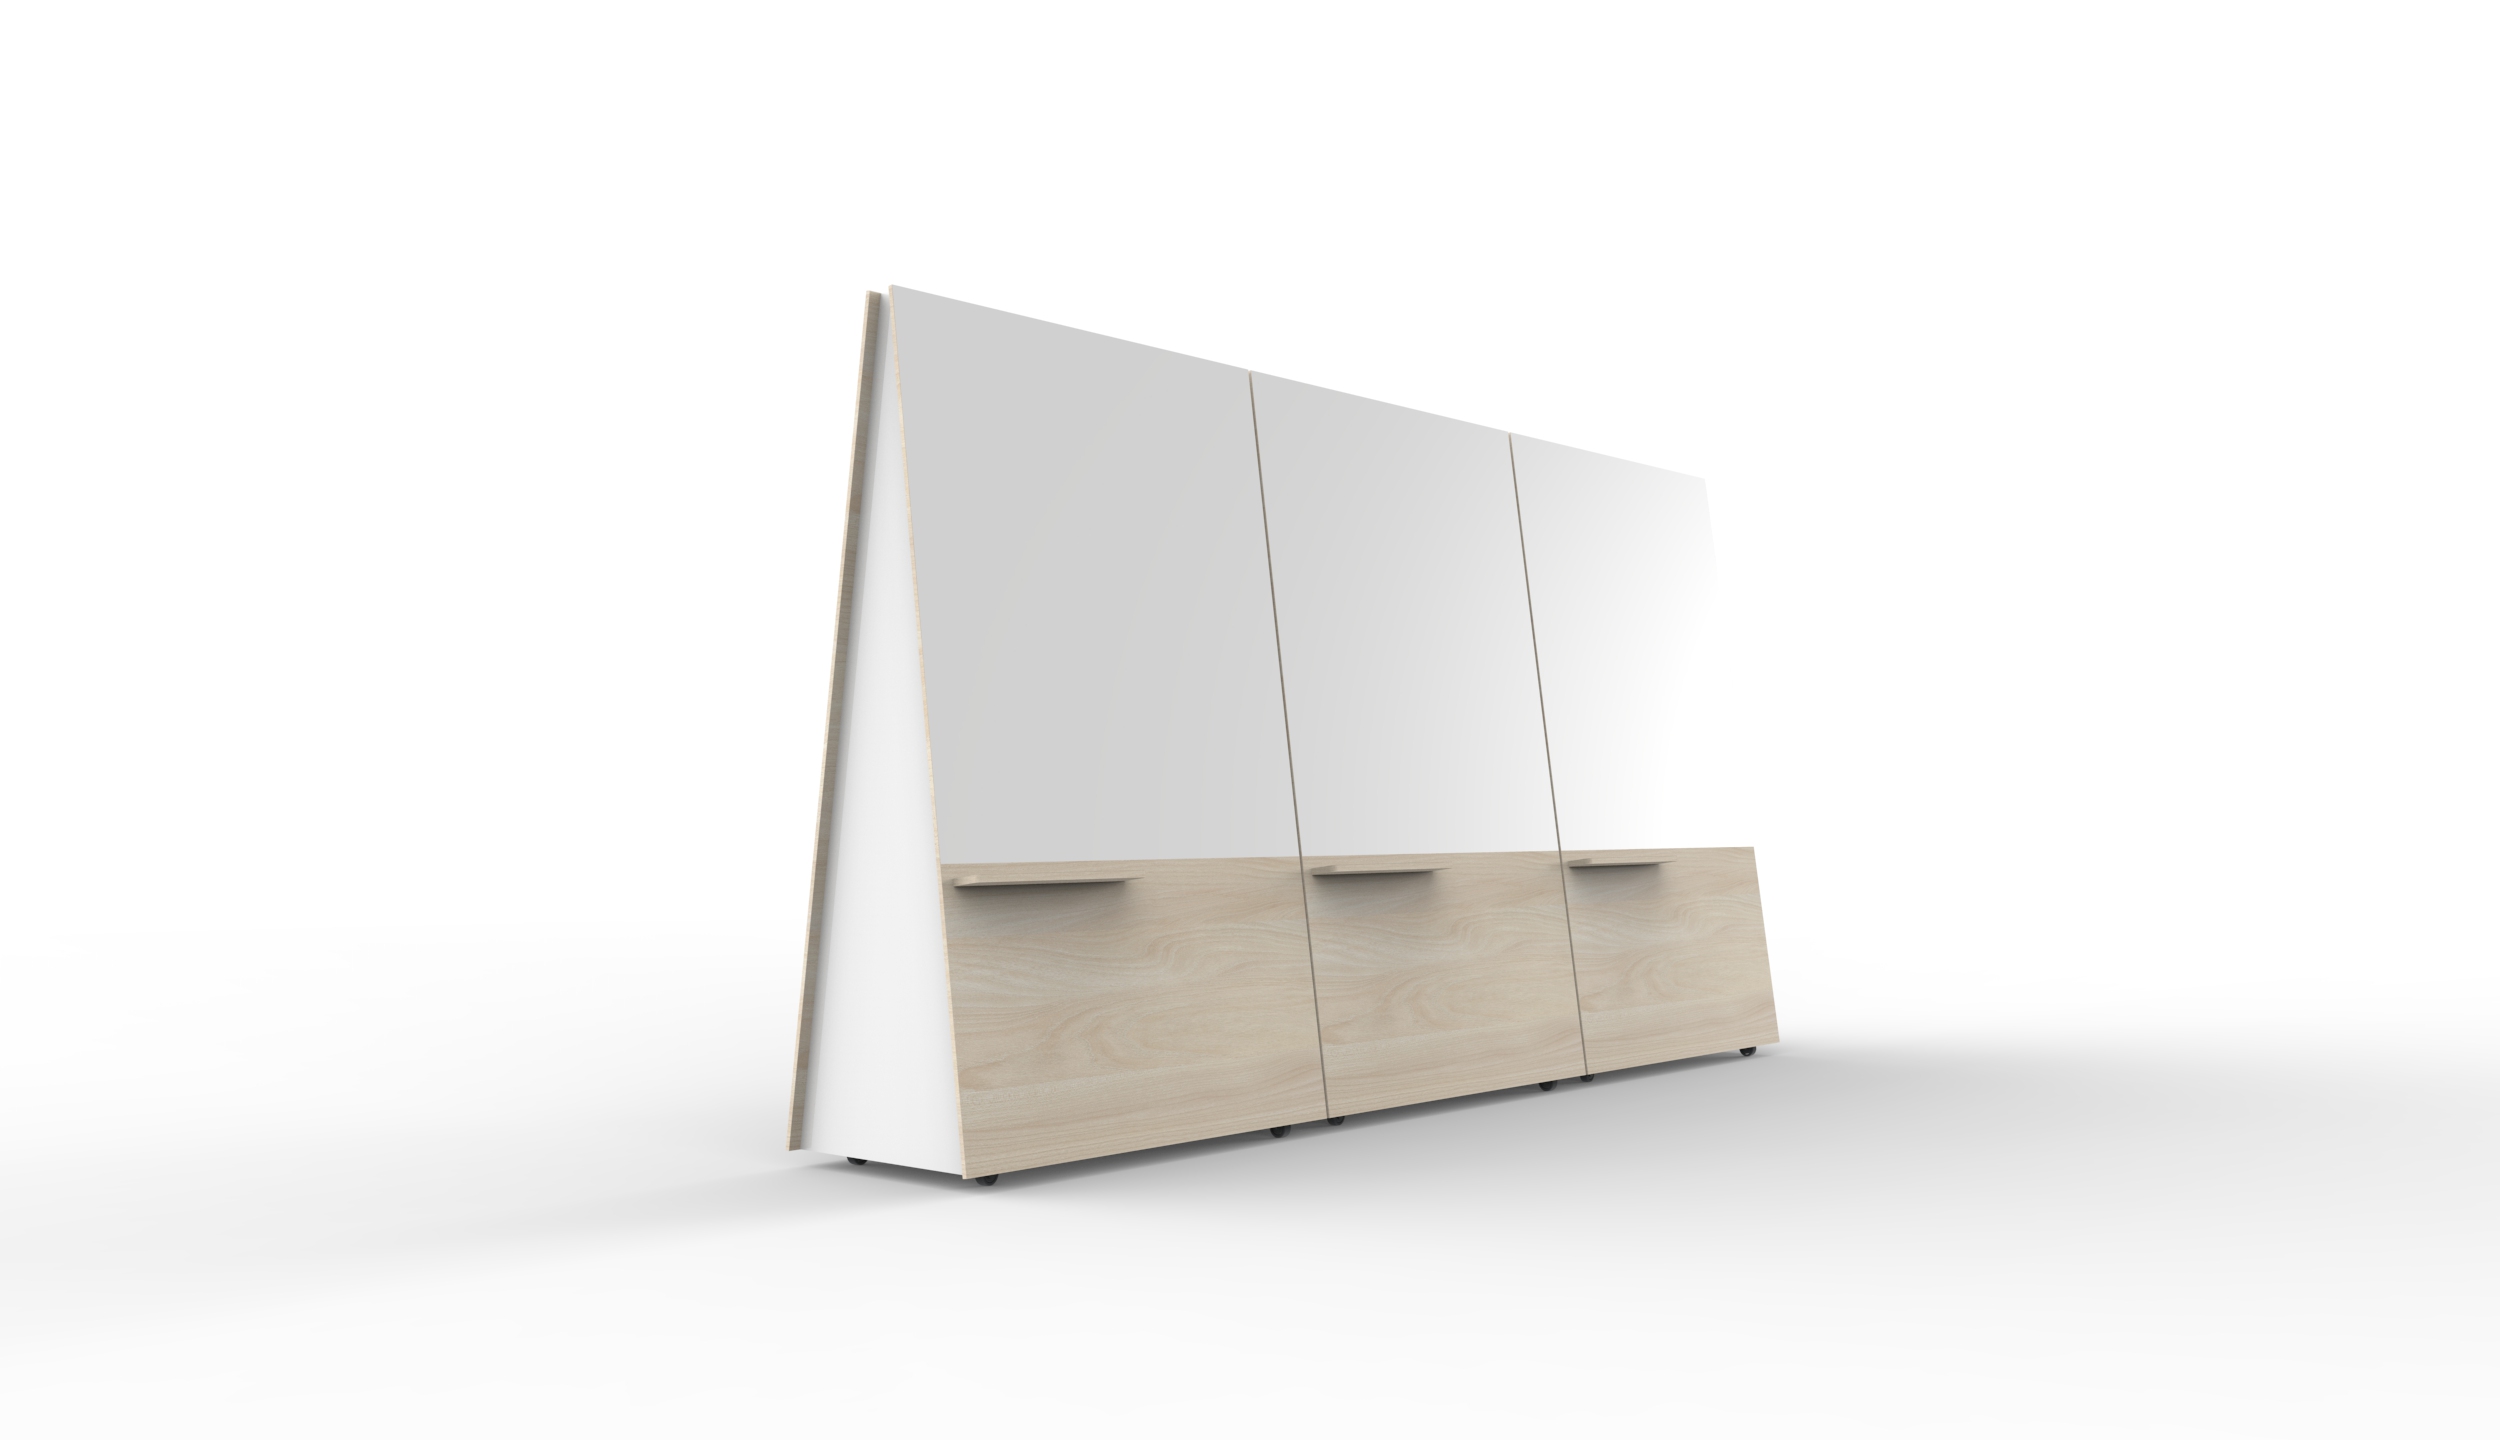 Three Wedge Whiteboards by Luxxbox